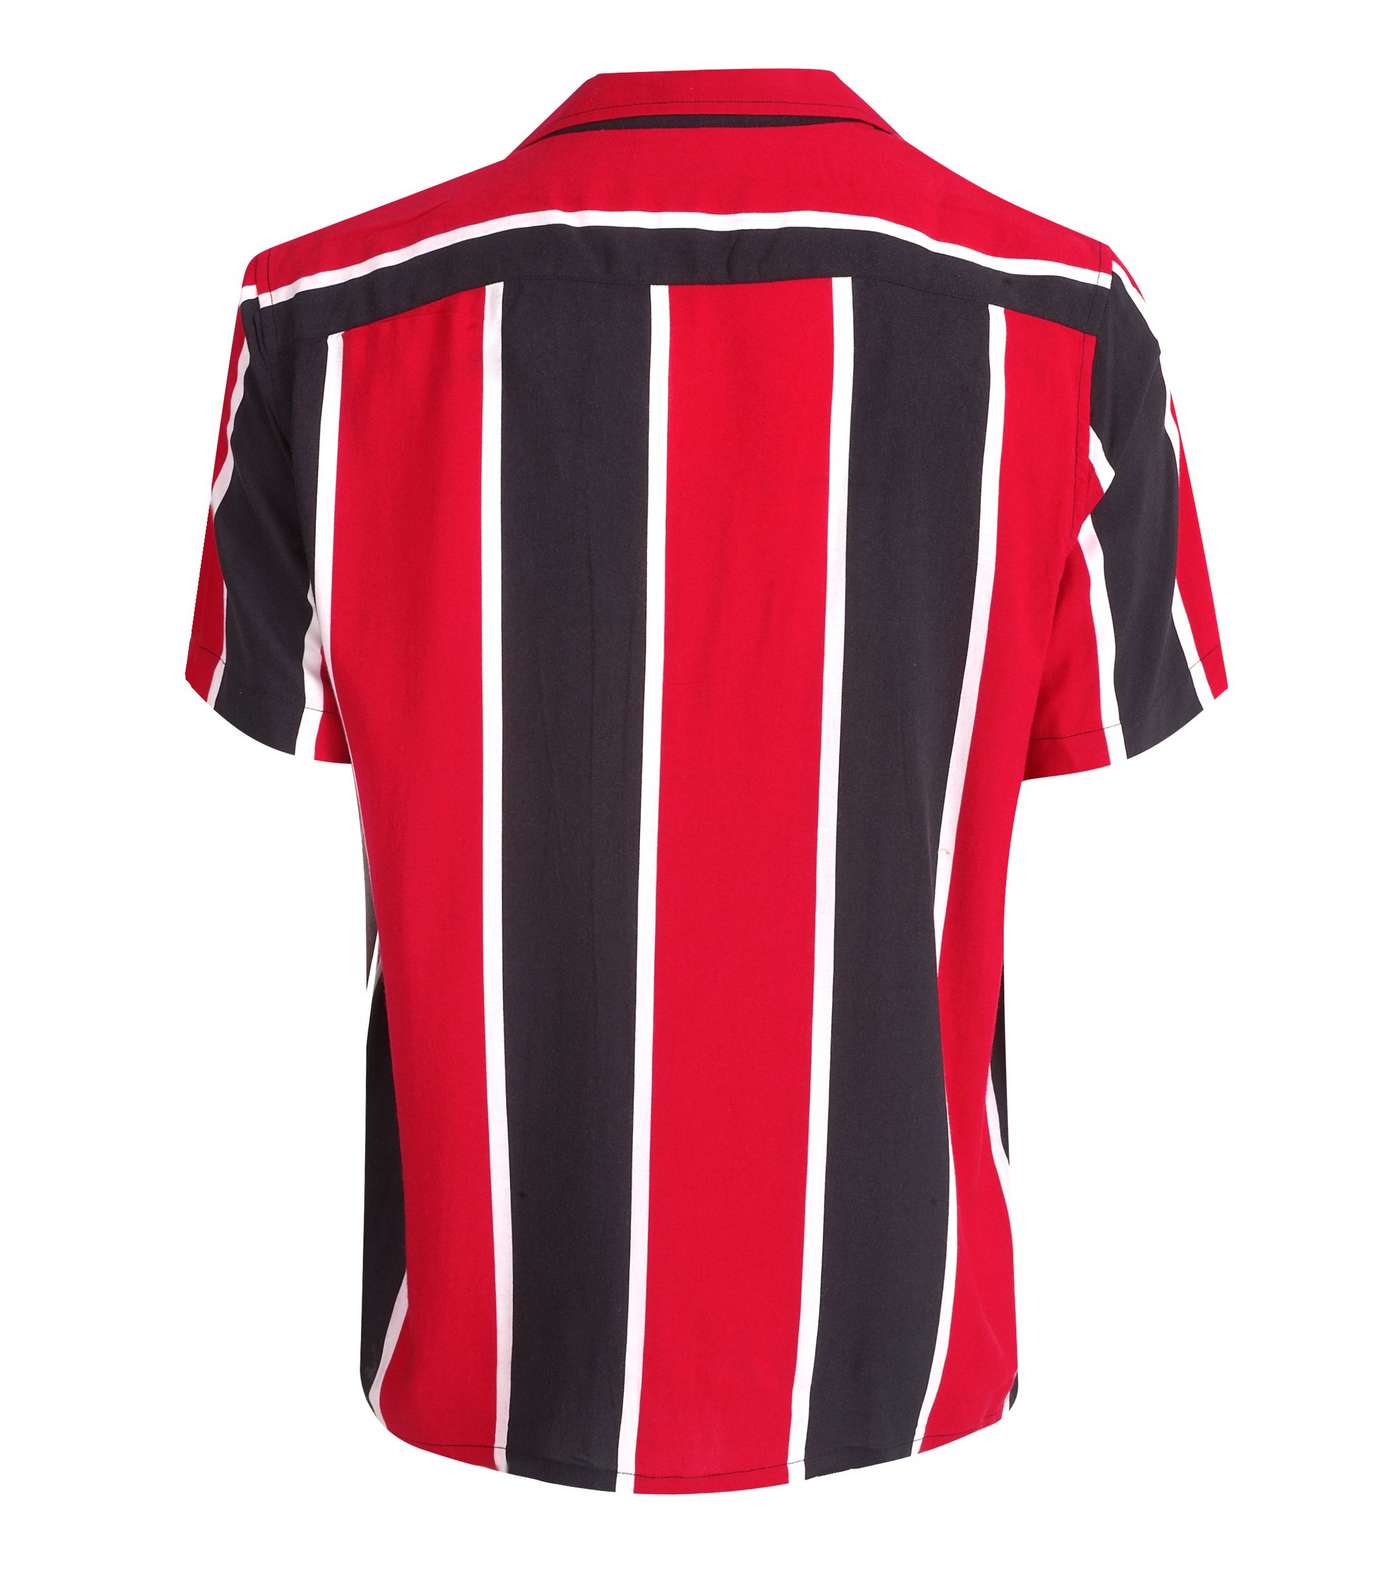 Plus Size Red Stripe Short Sleeve Shirt Image 2